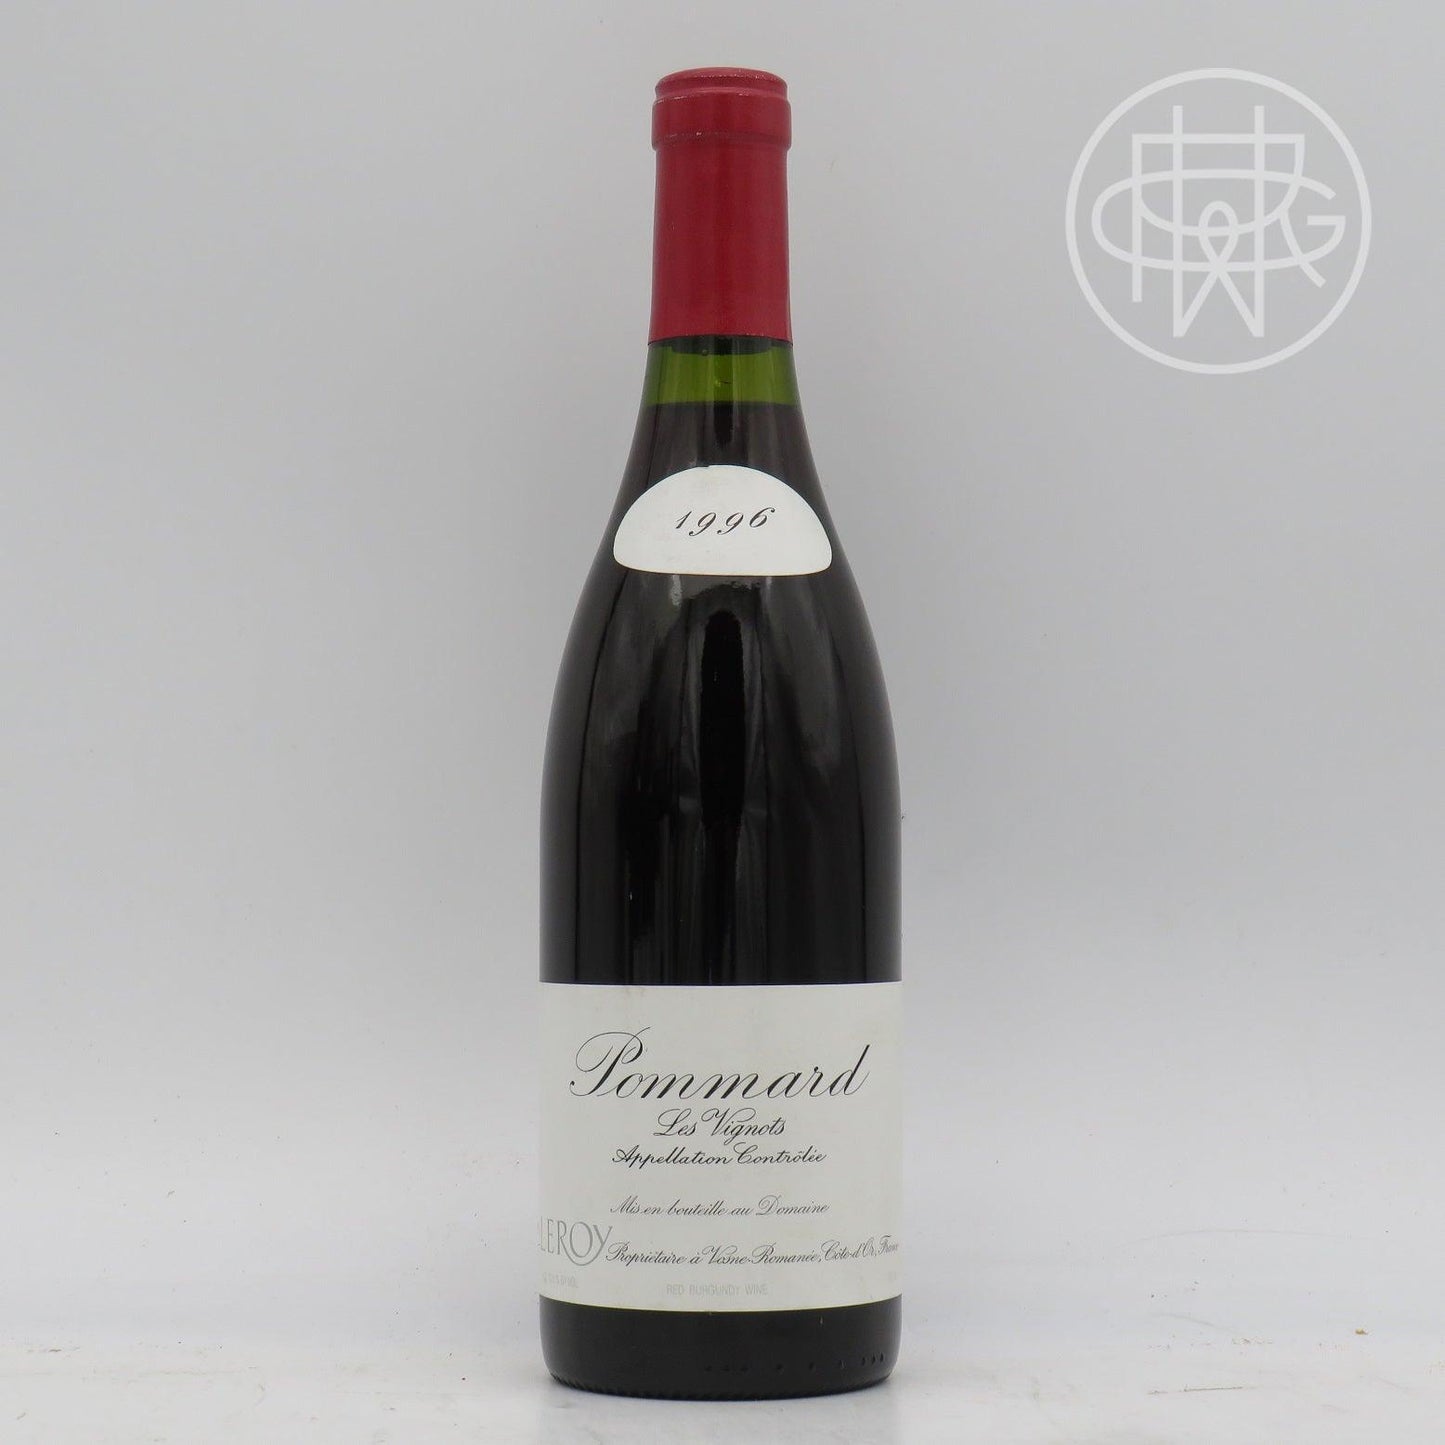 Leroy Pommard Vignots 1996 750mL - GRW Wine Collection